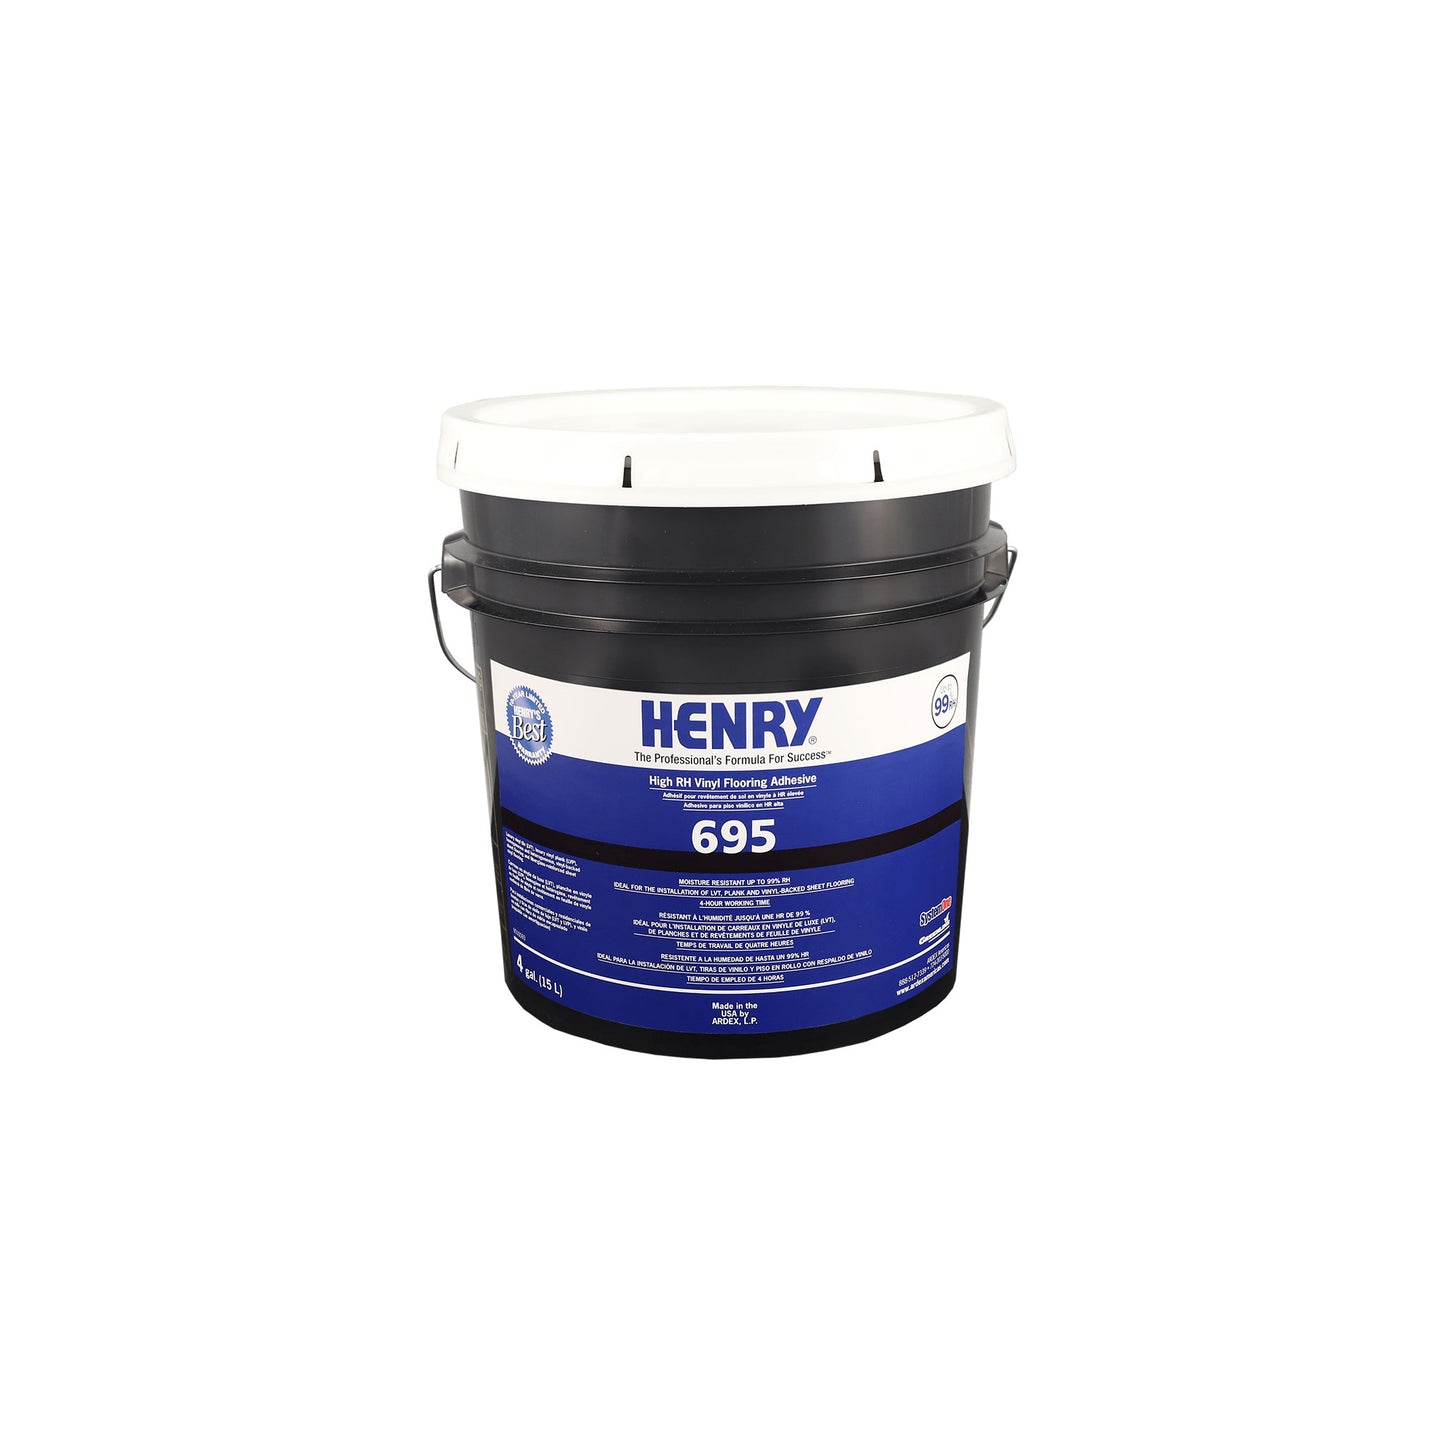 ARDEX Henry 695 H695-04 H695-15 High Strength Vinyl Siding Adhesive